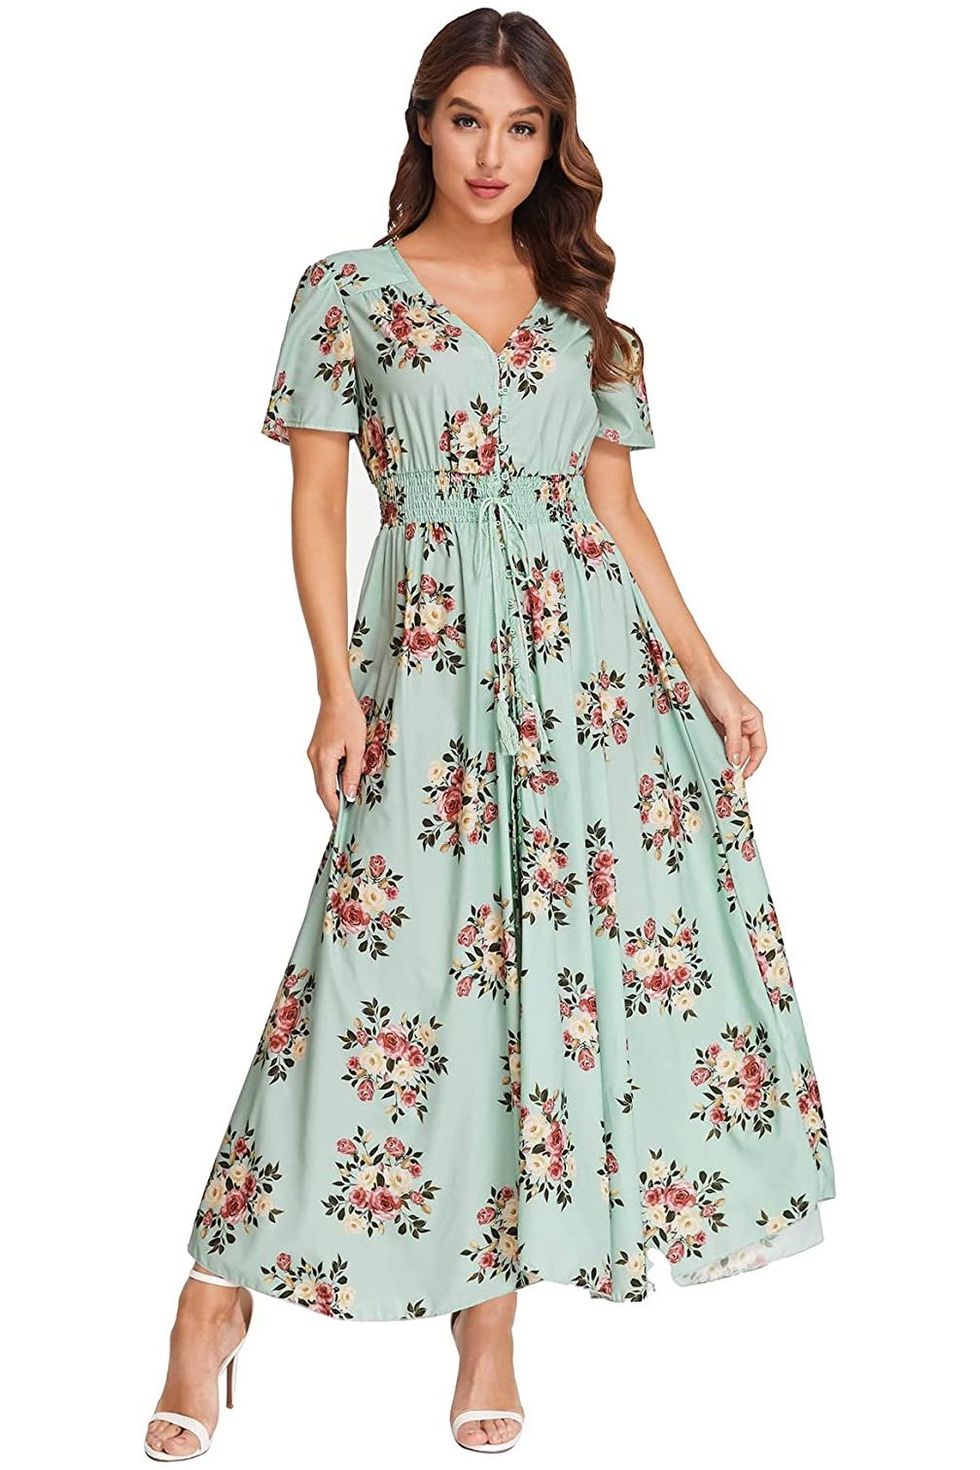 Milumia Women's Button Up Floral Print Maxi Dress